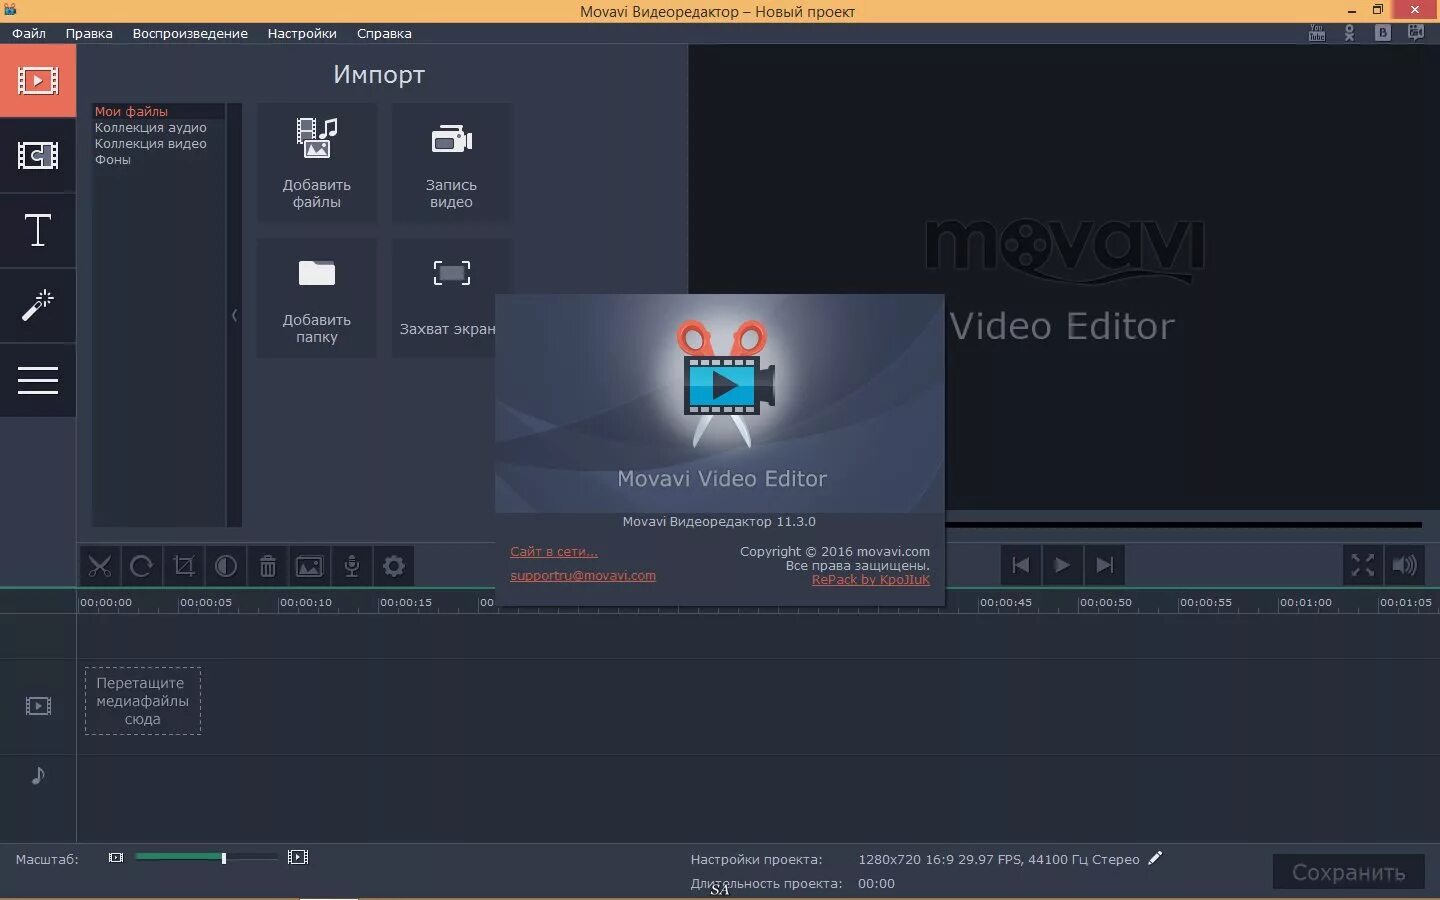 Мовави версии. Movavi Video Editor. Мовави видео эдитор. Видеоредактор Movavi Video. Программа Movavi Video Editor.